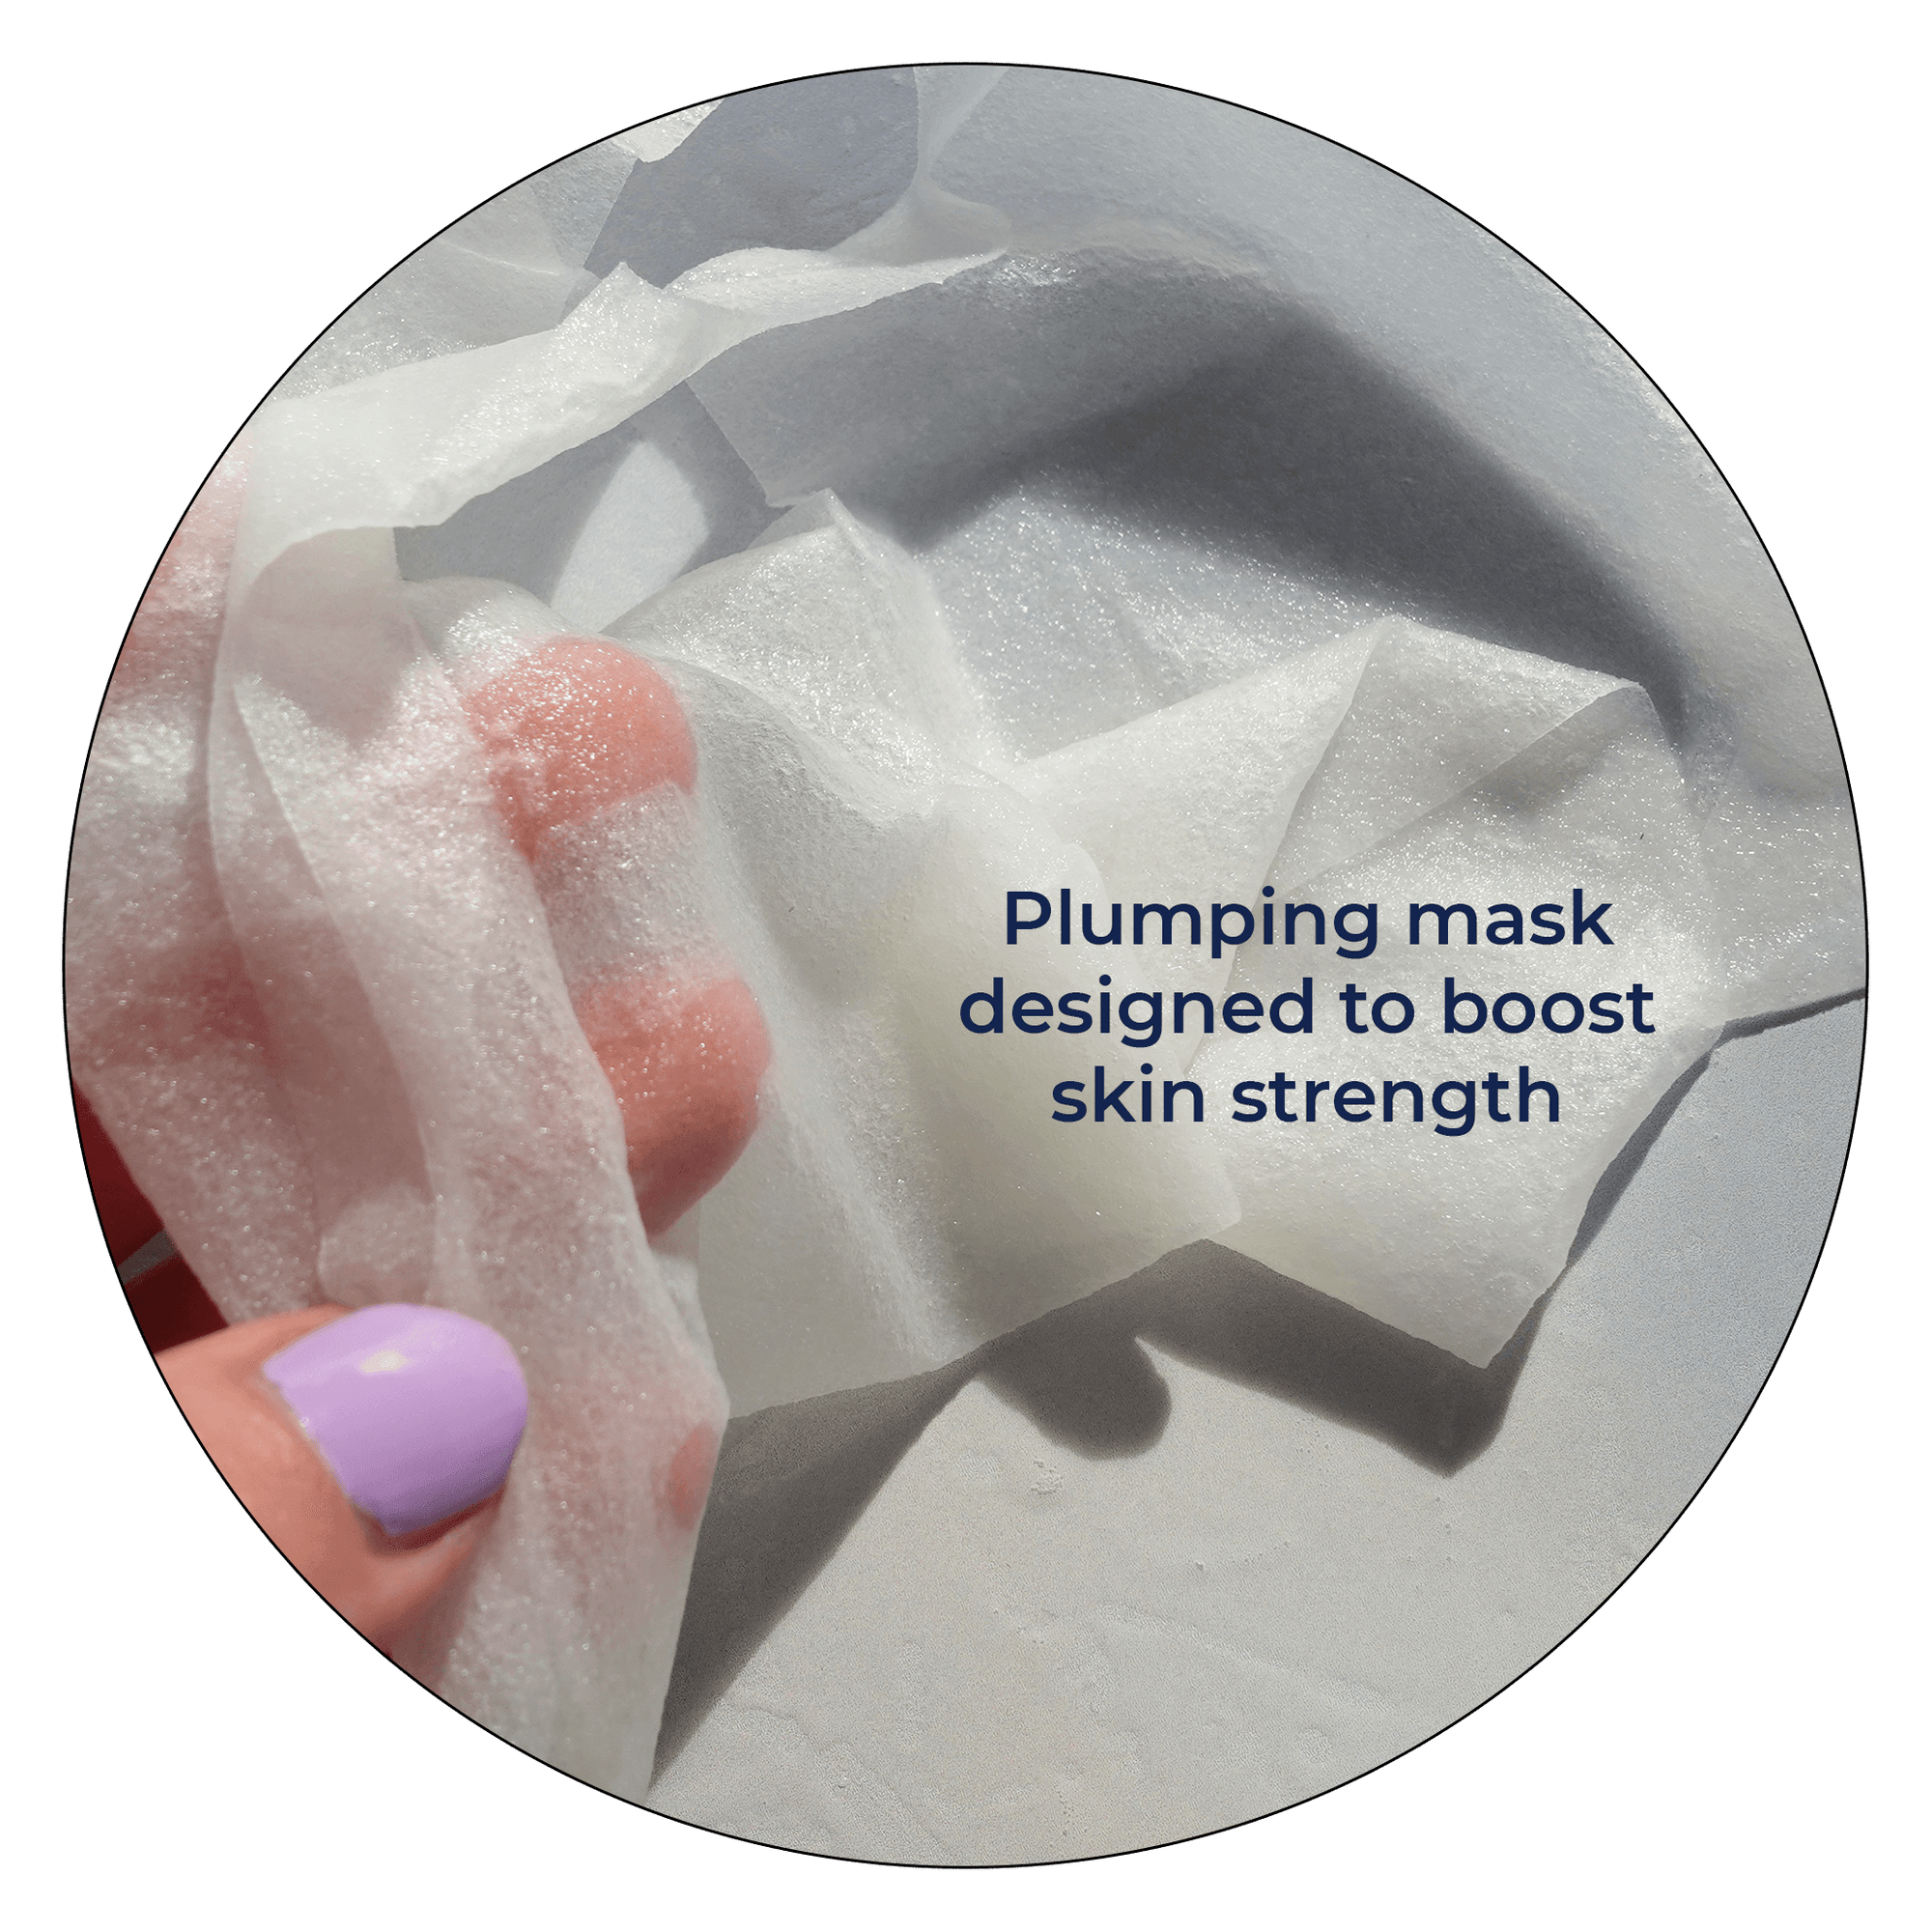 Pomegranate Face Sheet Mask - Vitamasques